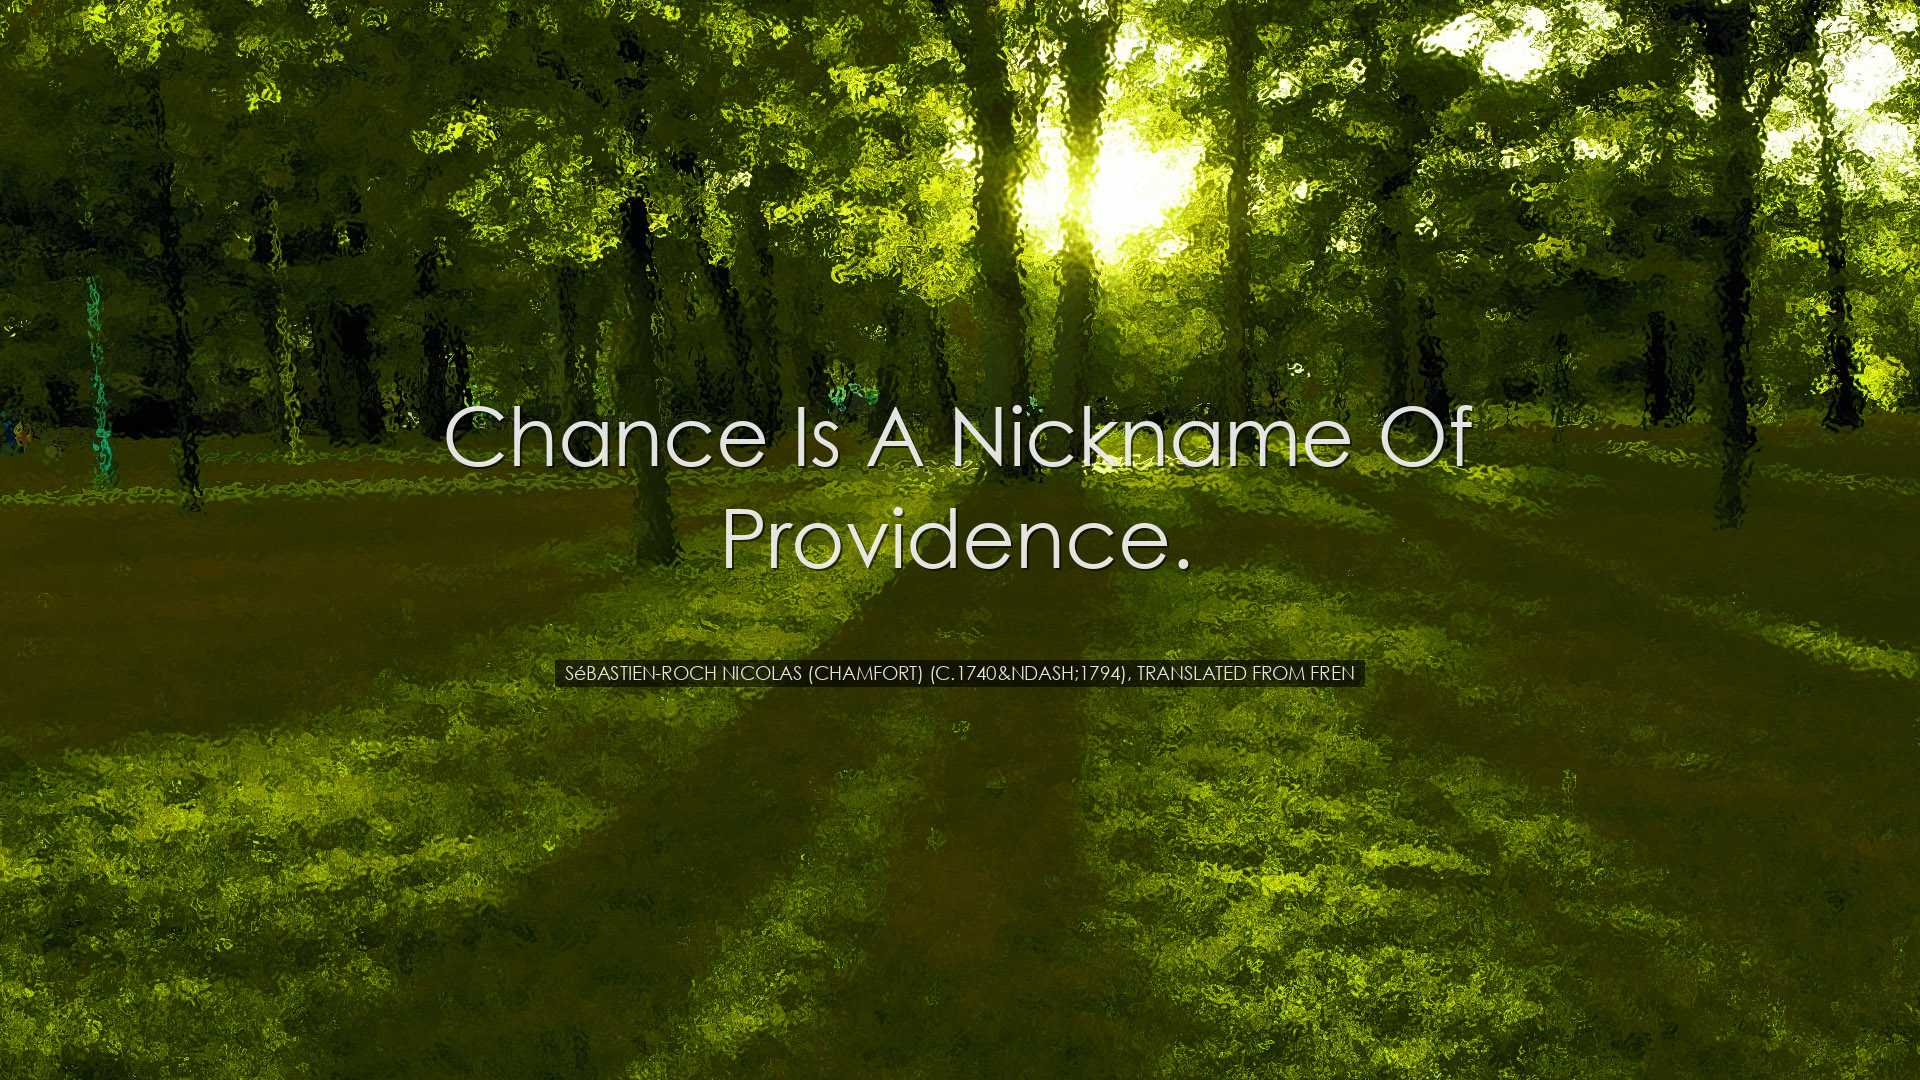 Chance is a nickname of Providence. - Sébastien-Roch Nicolas